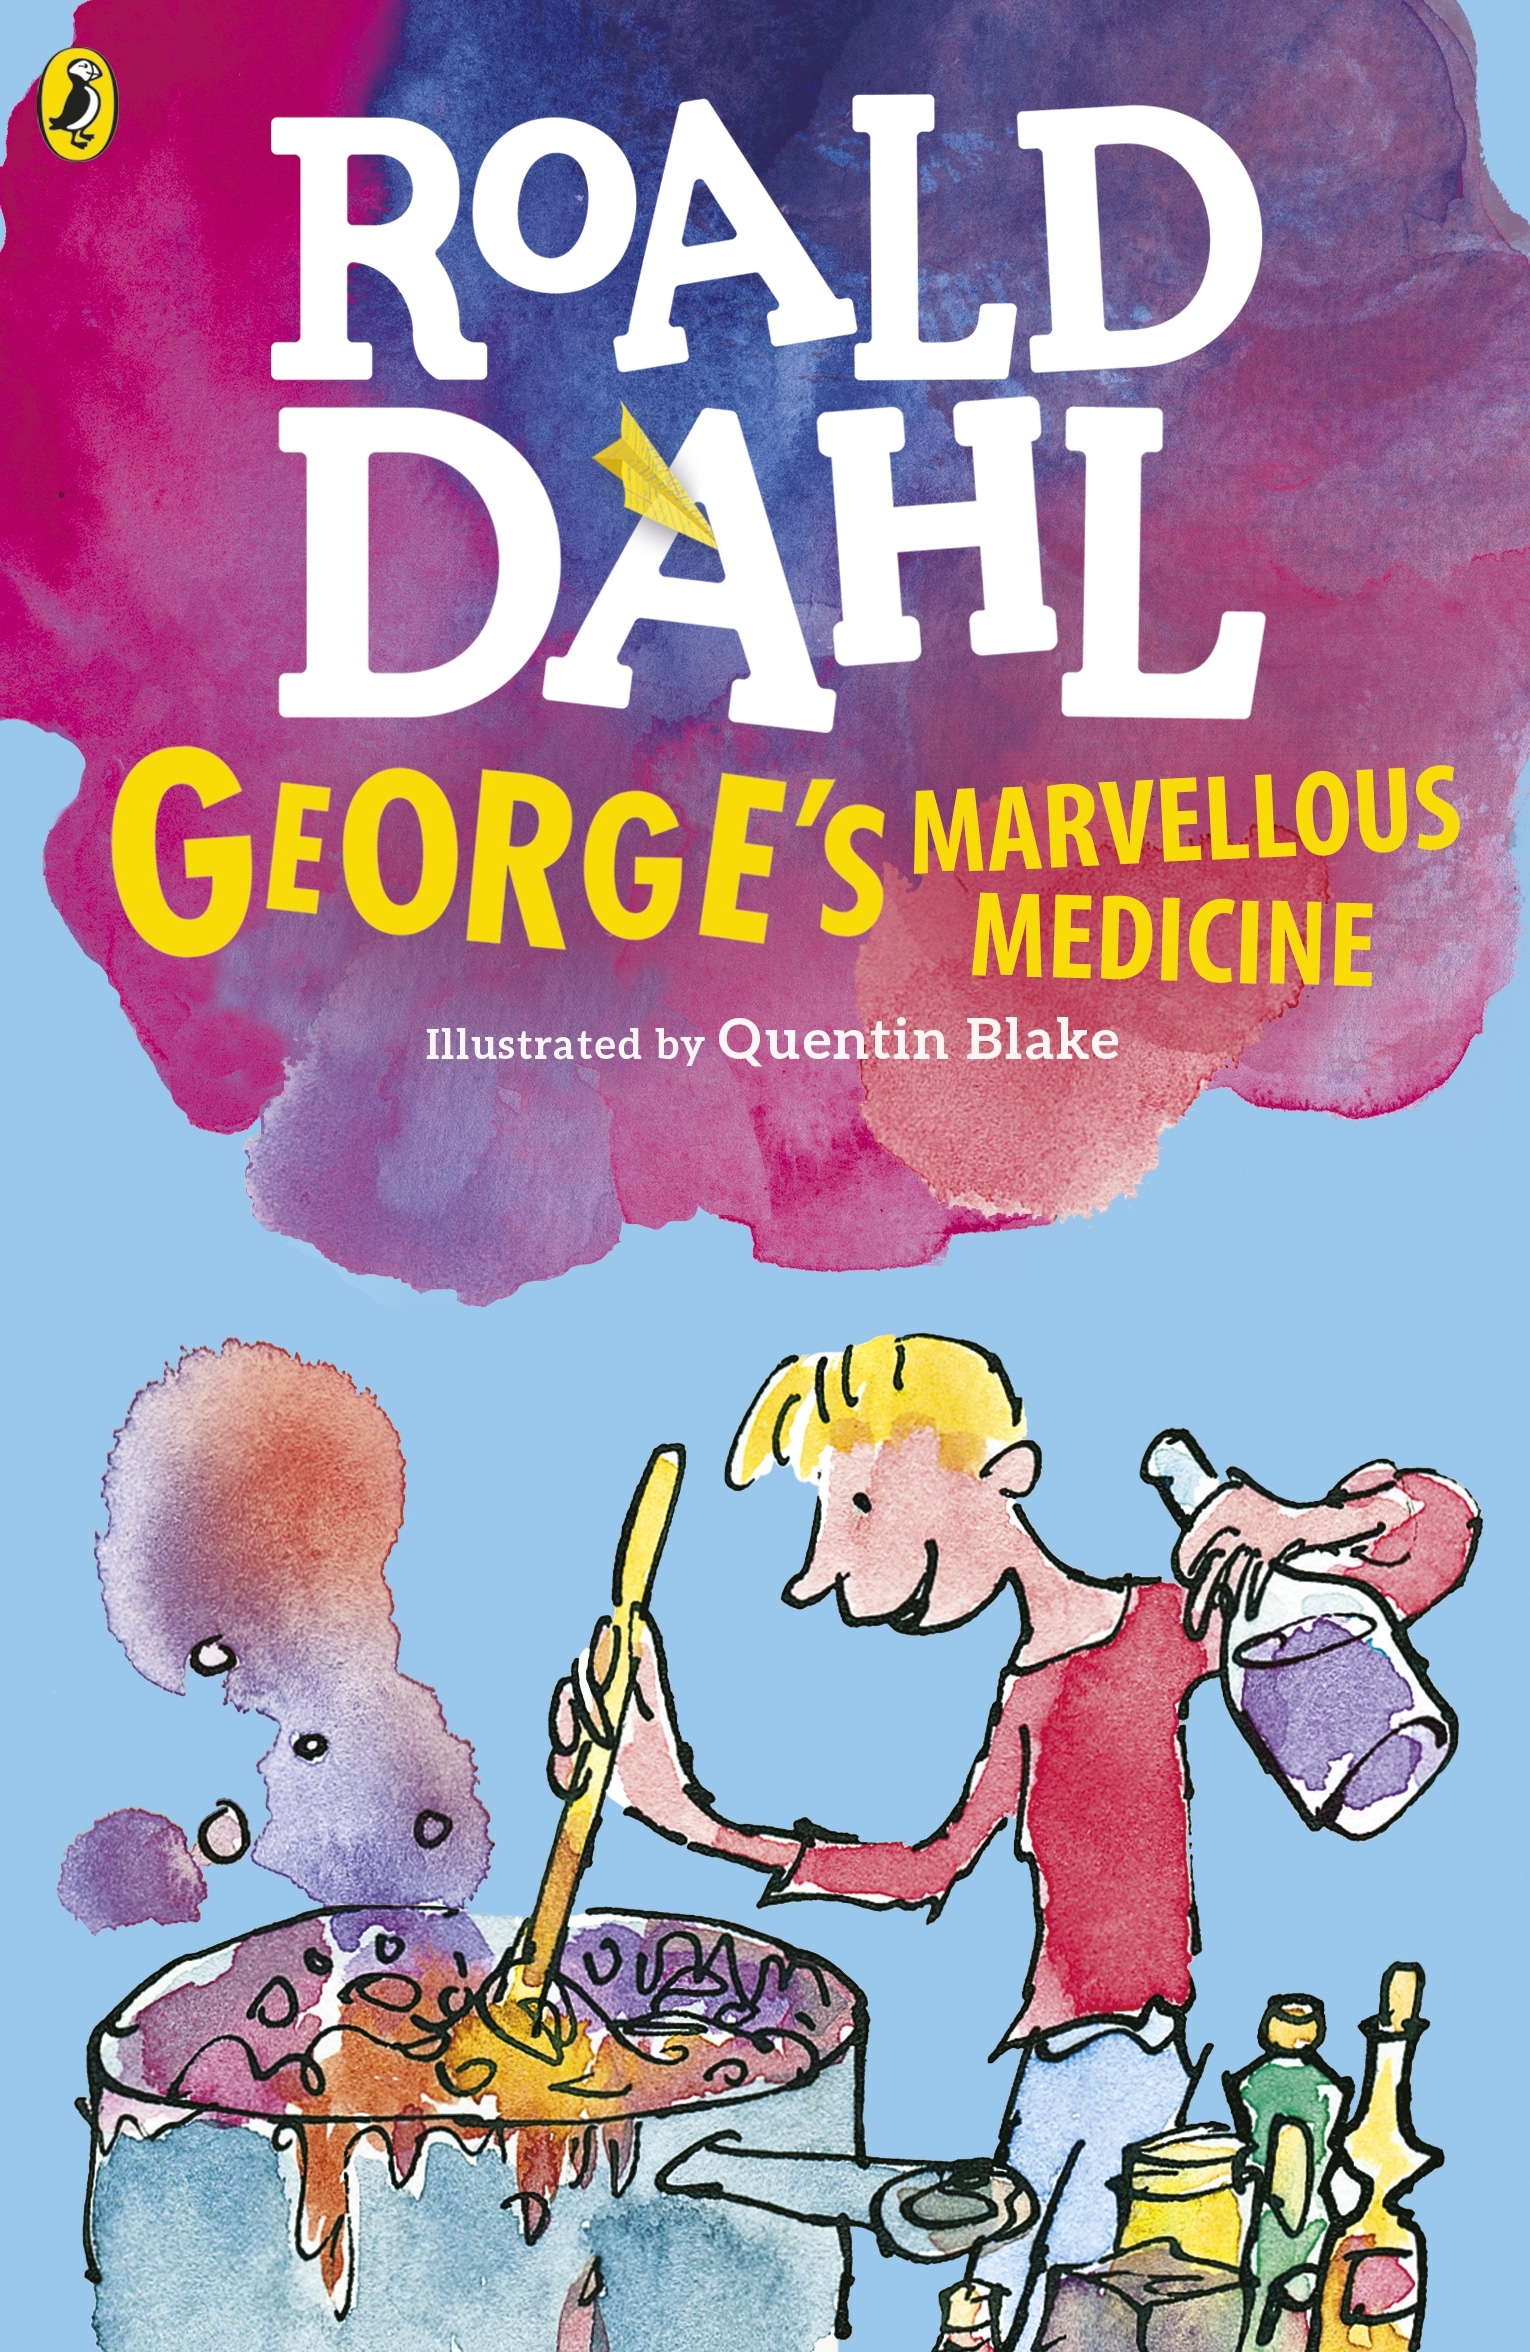 Book “George's Marvellous Medicine” by Roald Dahl — February 11, 2016